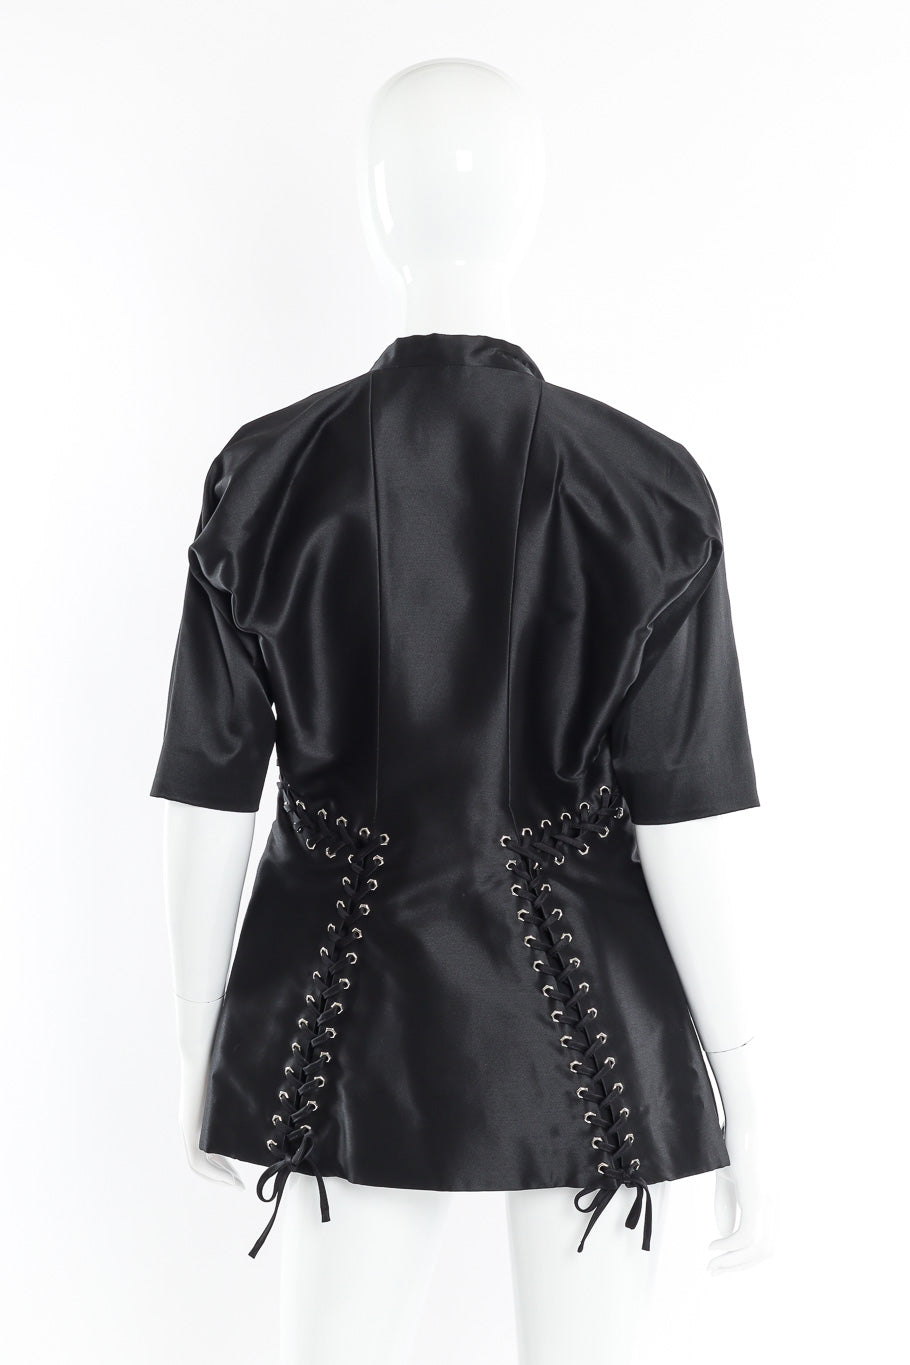 Grommet jacket by Yves Saint Laurent mannequin back @recessla